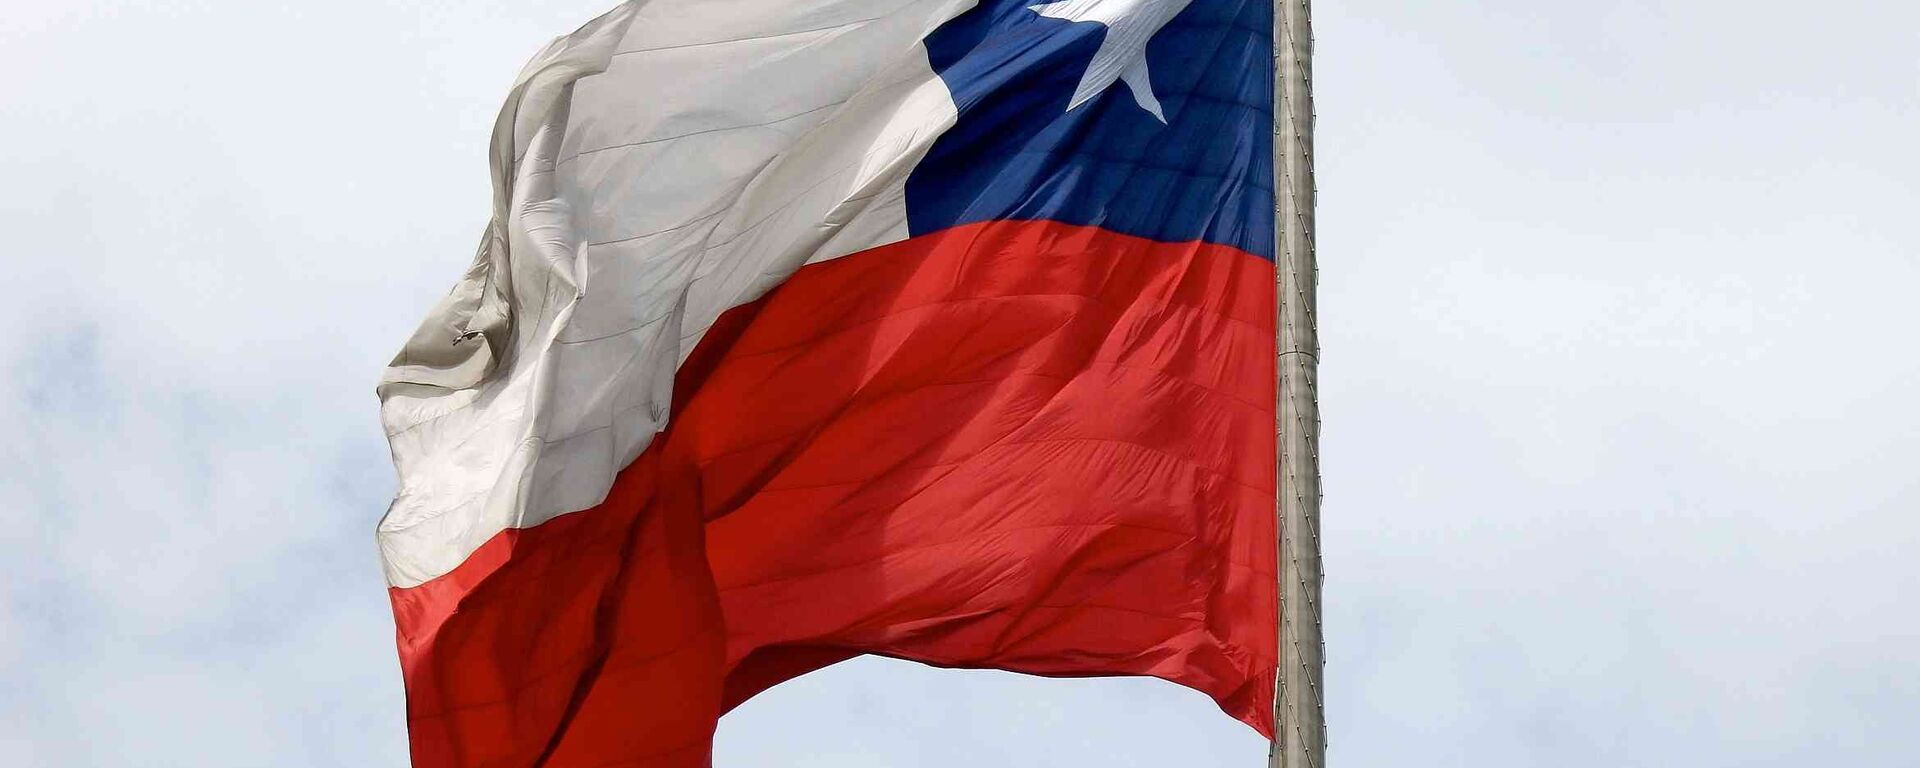 Bandera de Chile - Sputnik Mundo, 1920, 18.07.2021